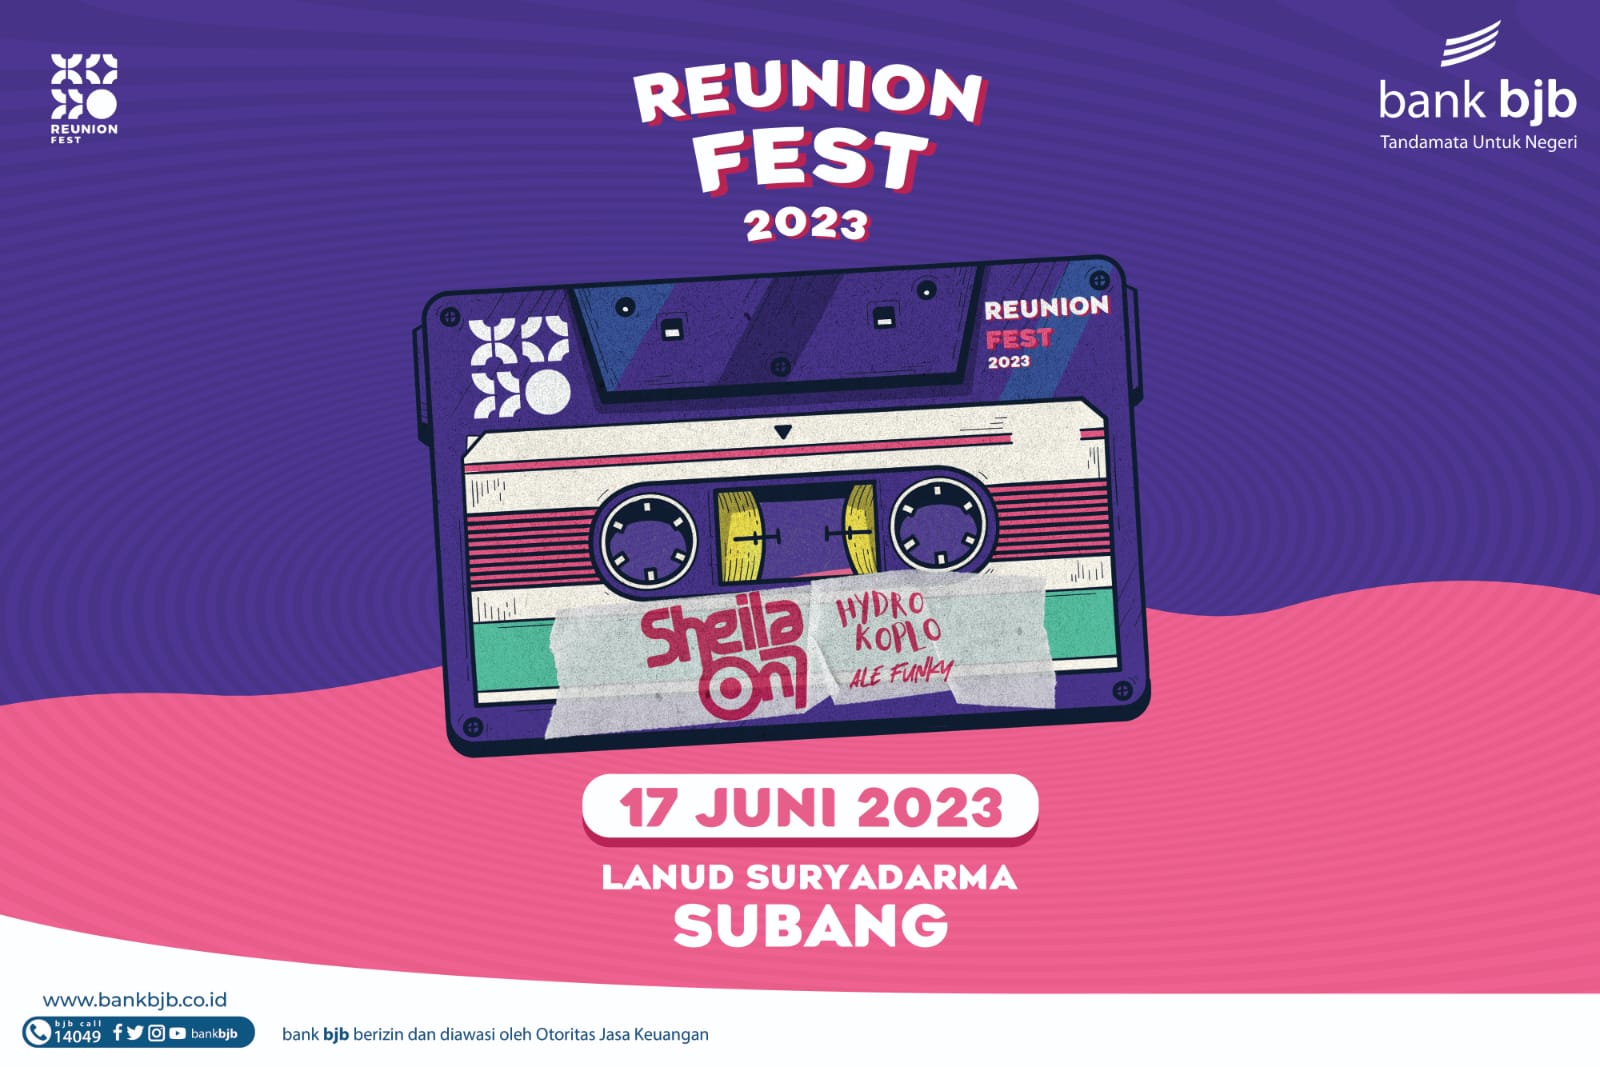 Reunion Fest 2023 Subang Banjir Promo